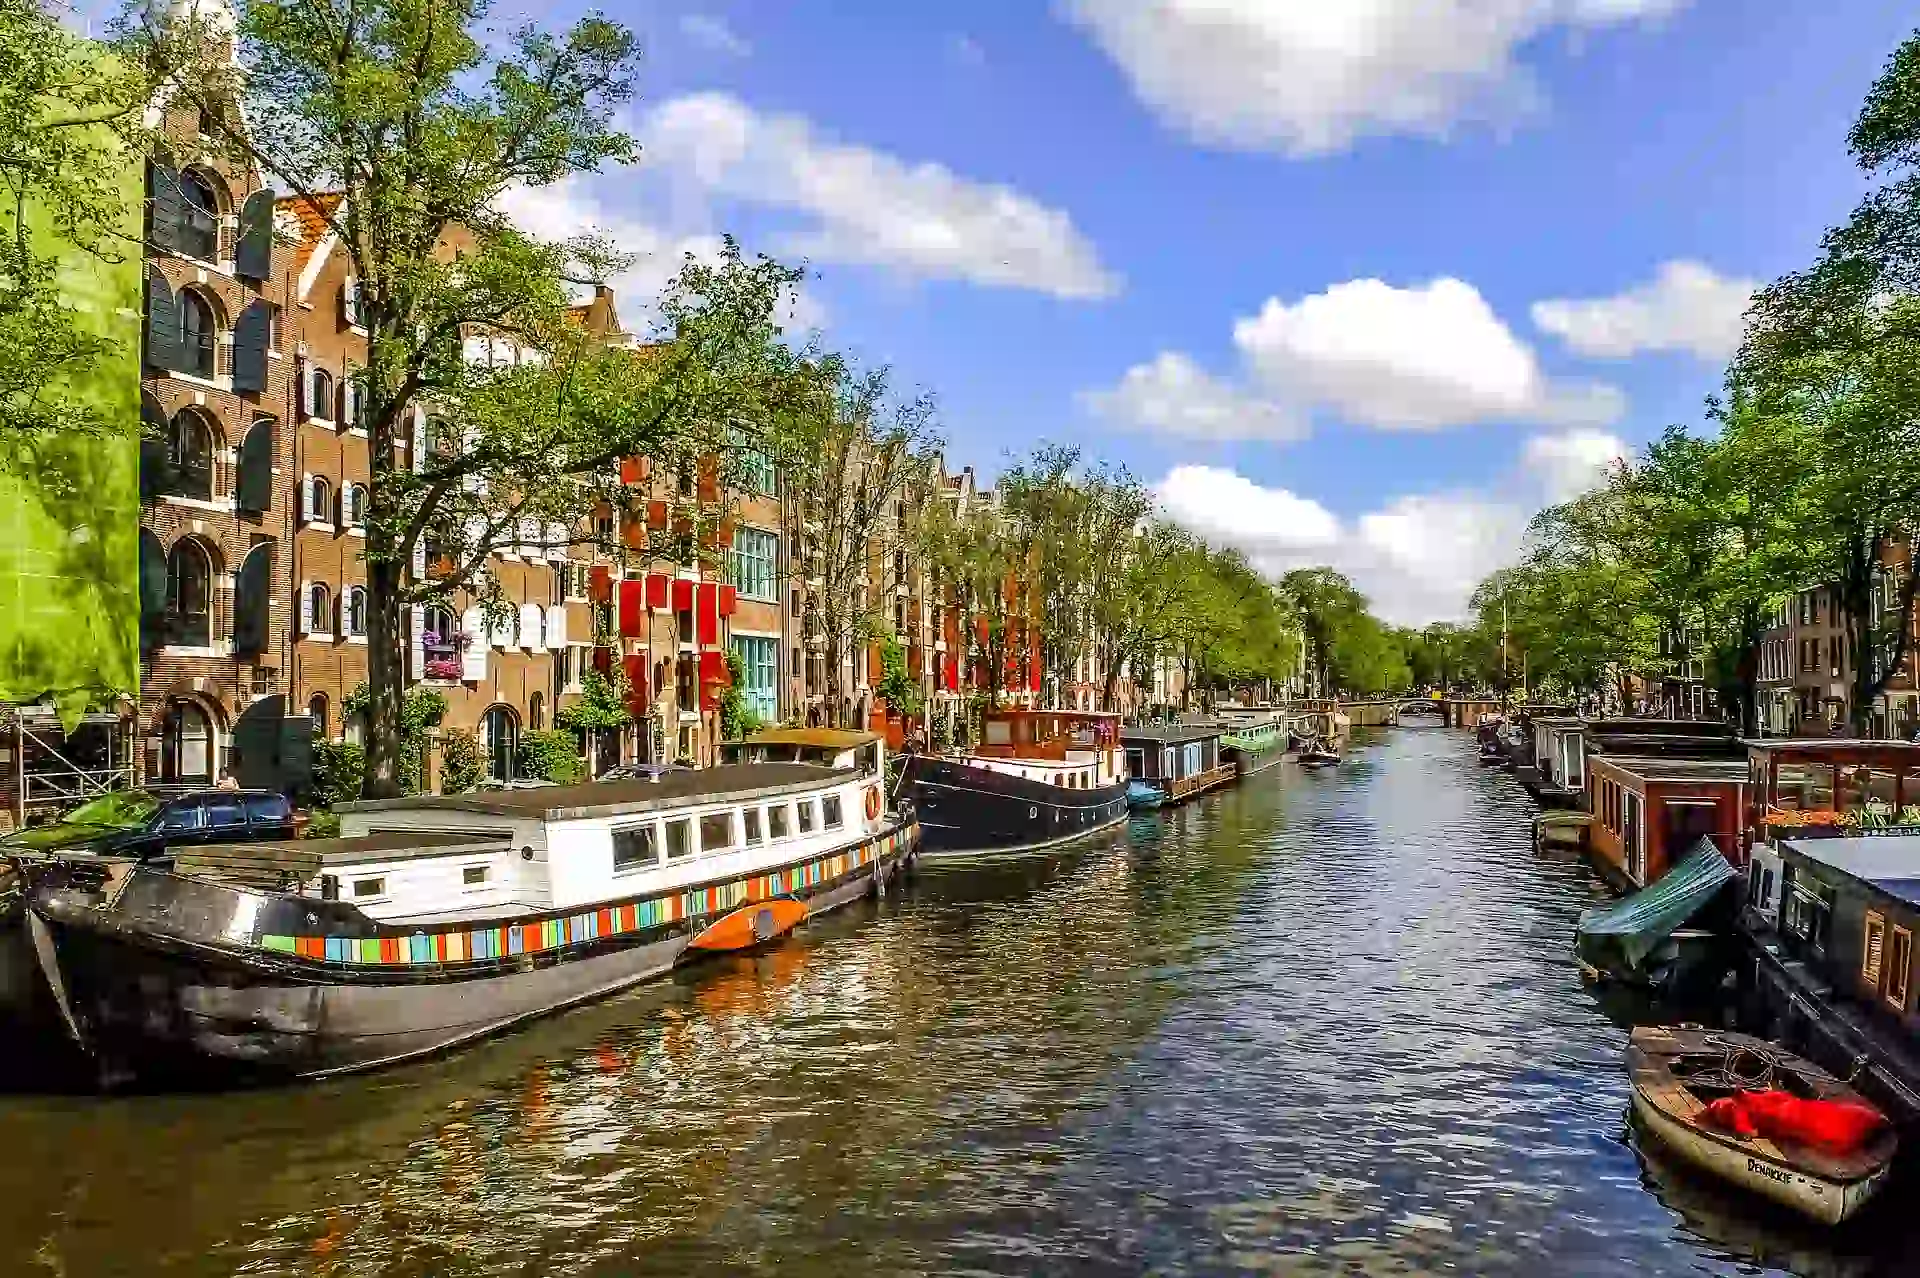 Day 2, Amsterdam sightseeing